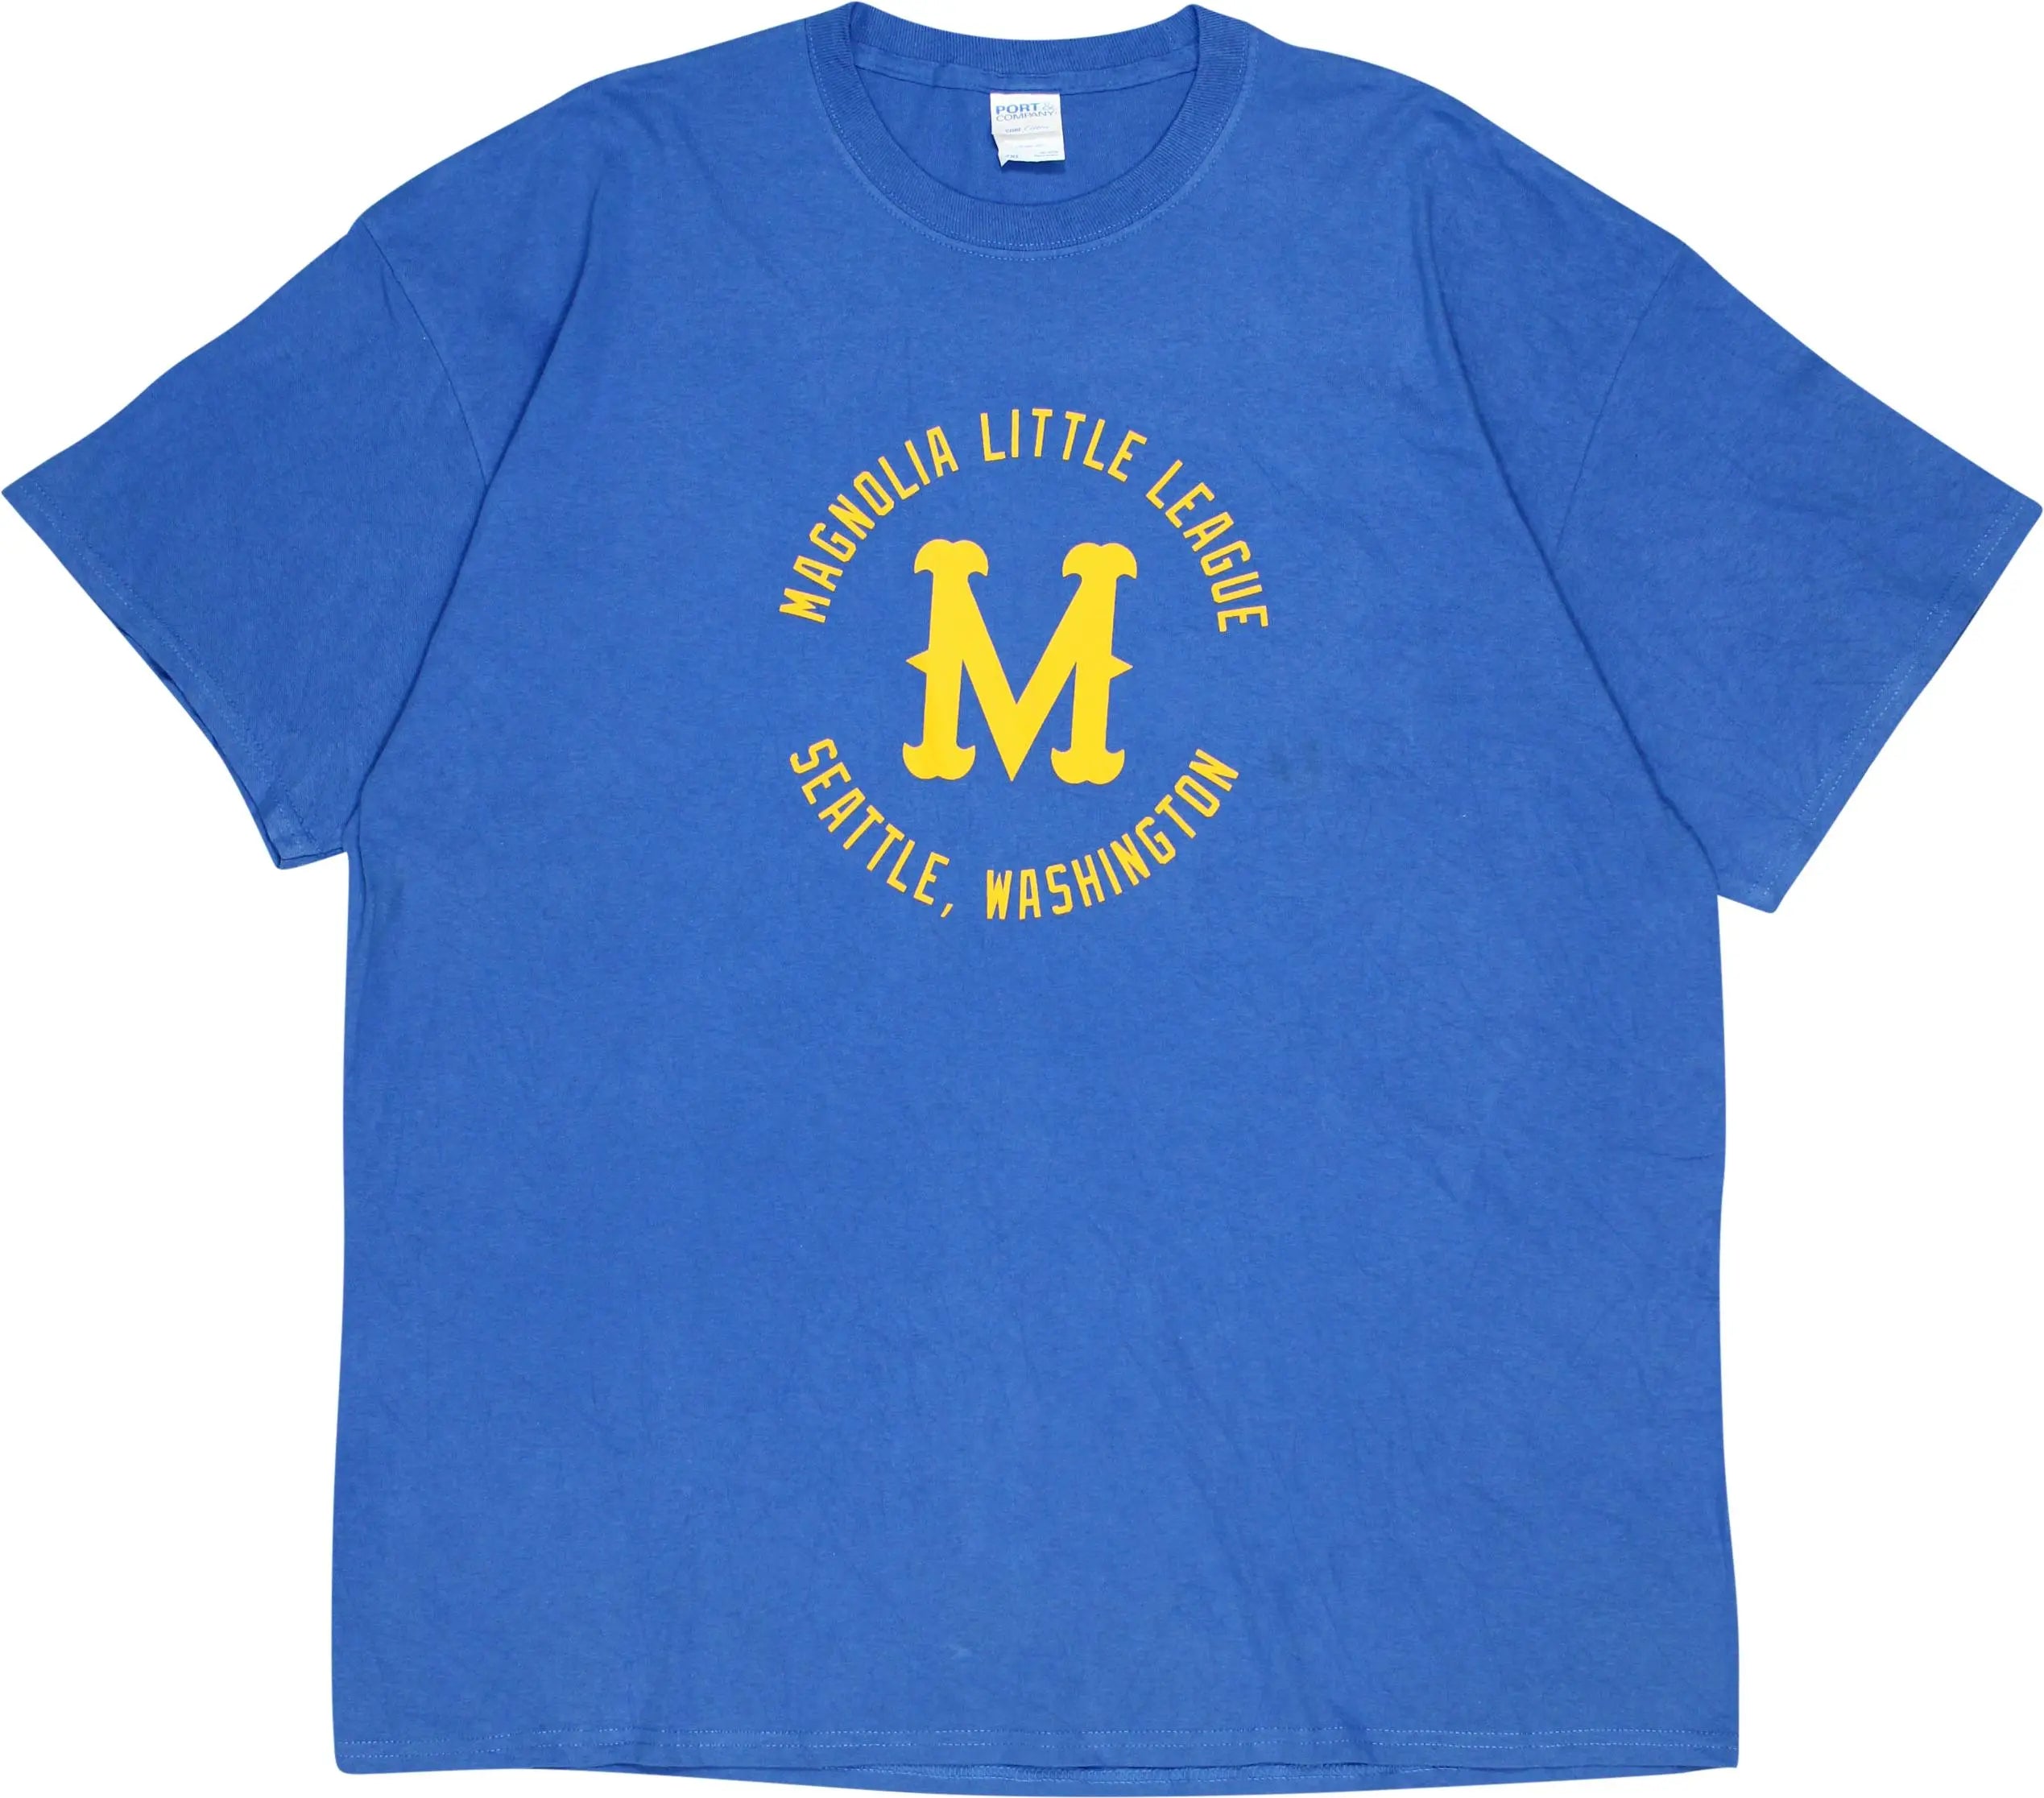 Port & Company - Magnolia Little League T-Shirt- ThriftTale.com - Vintage and second handclothing